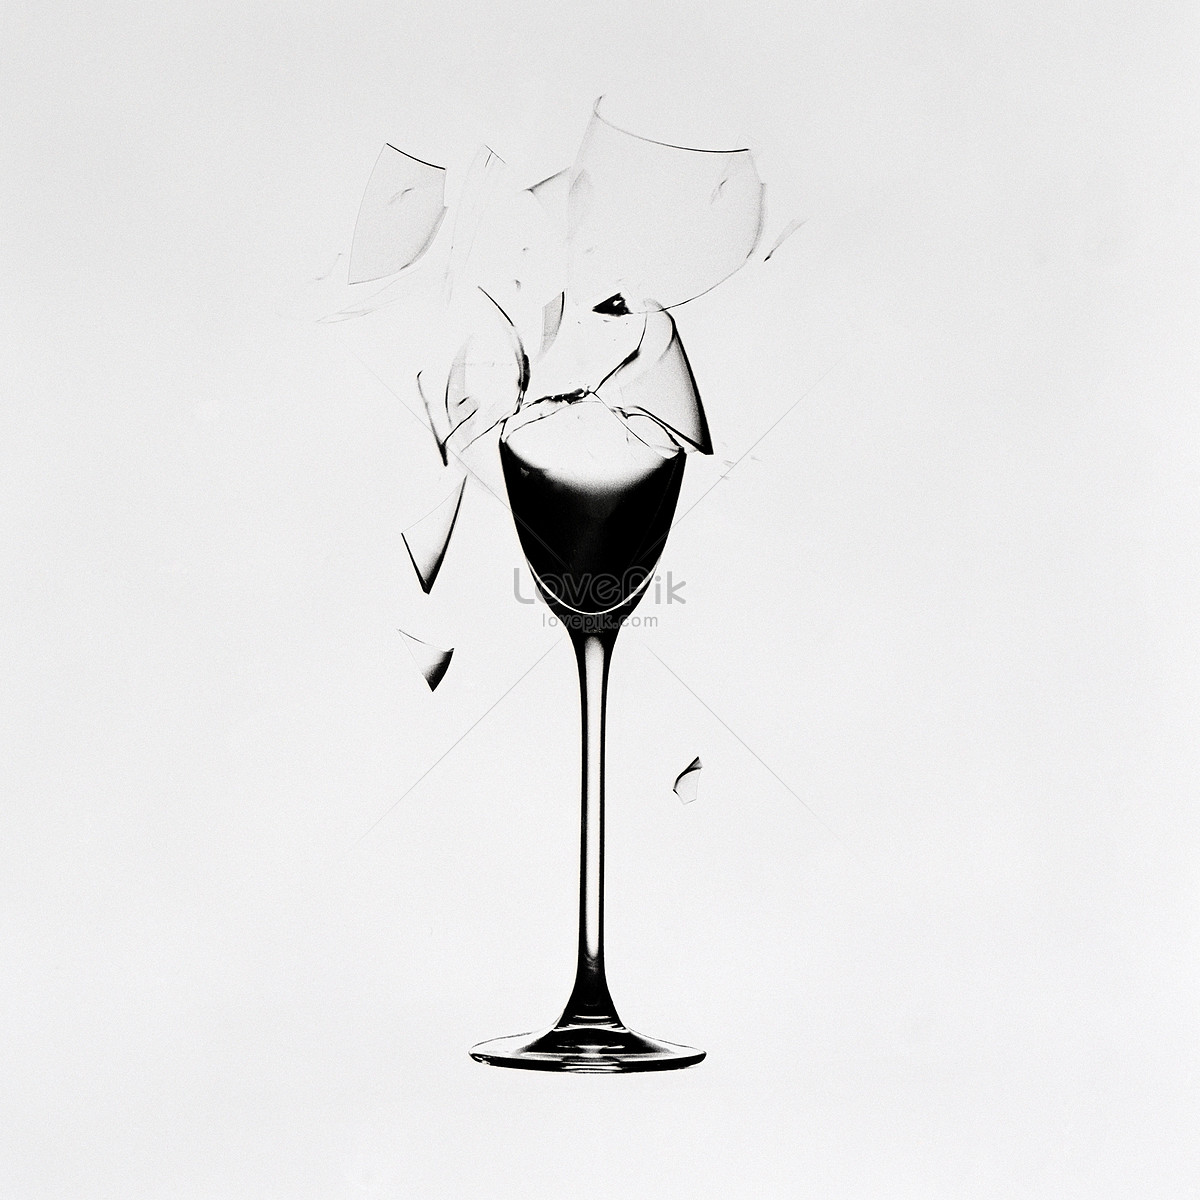 smashed wine glass